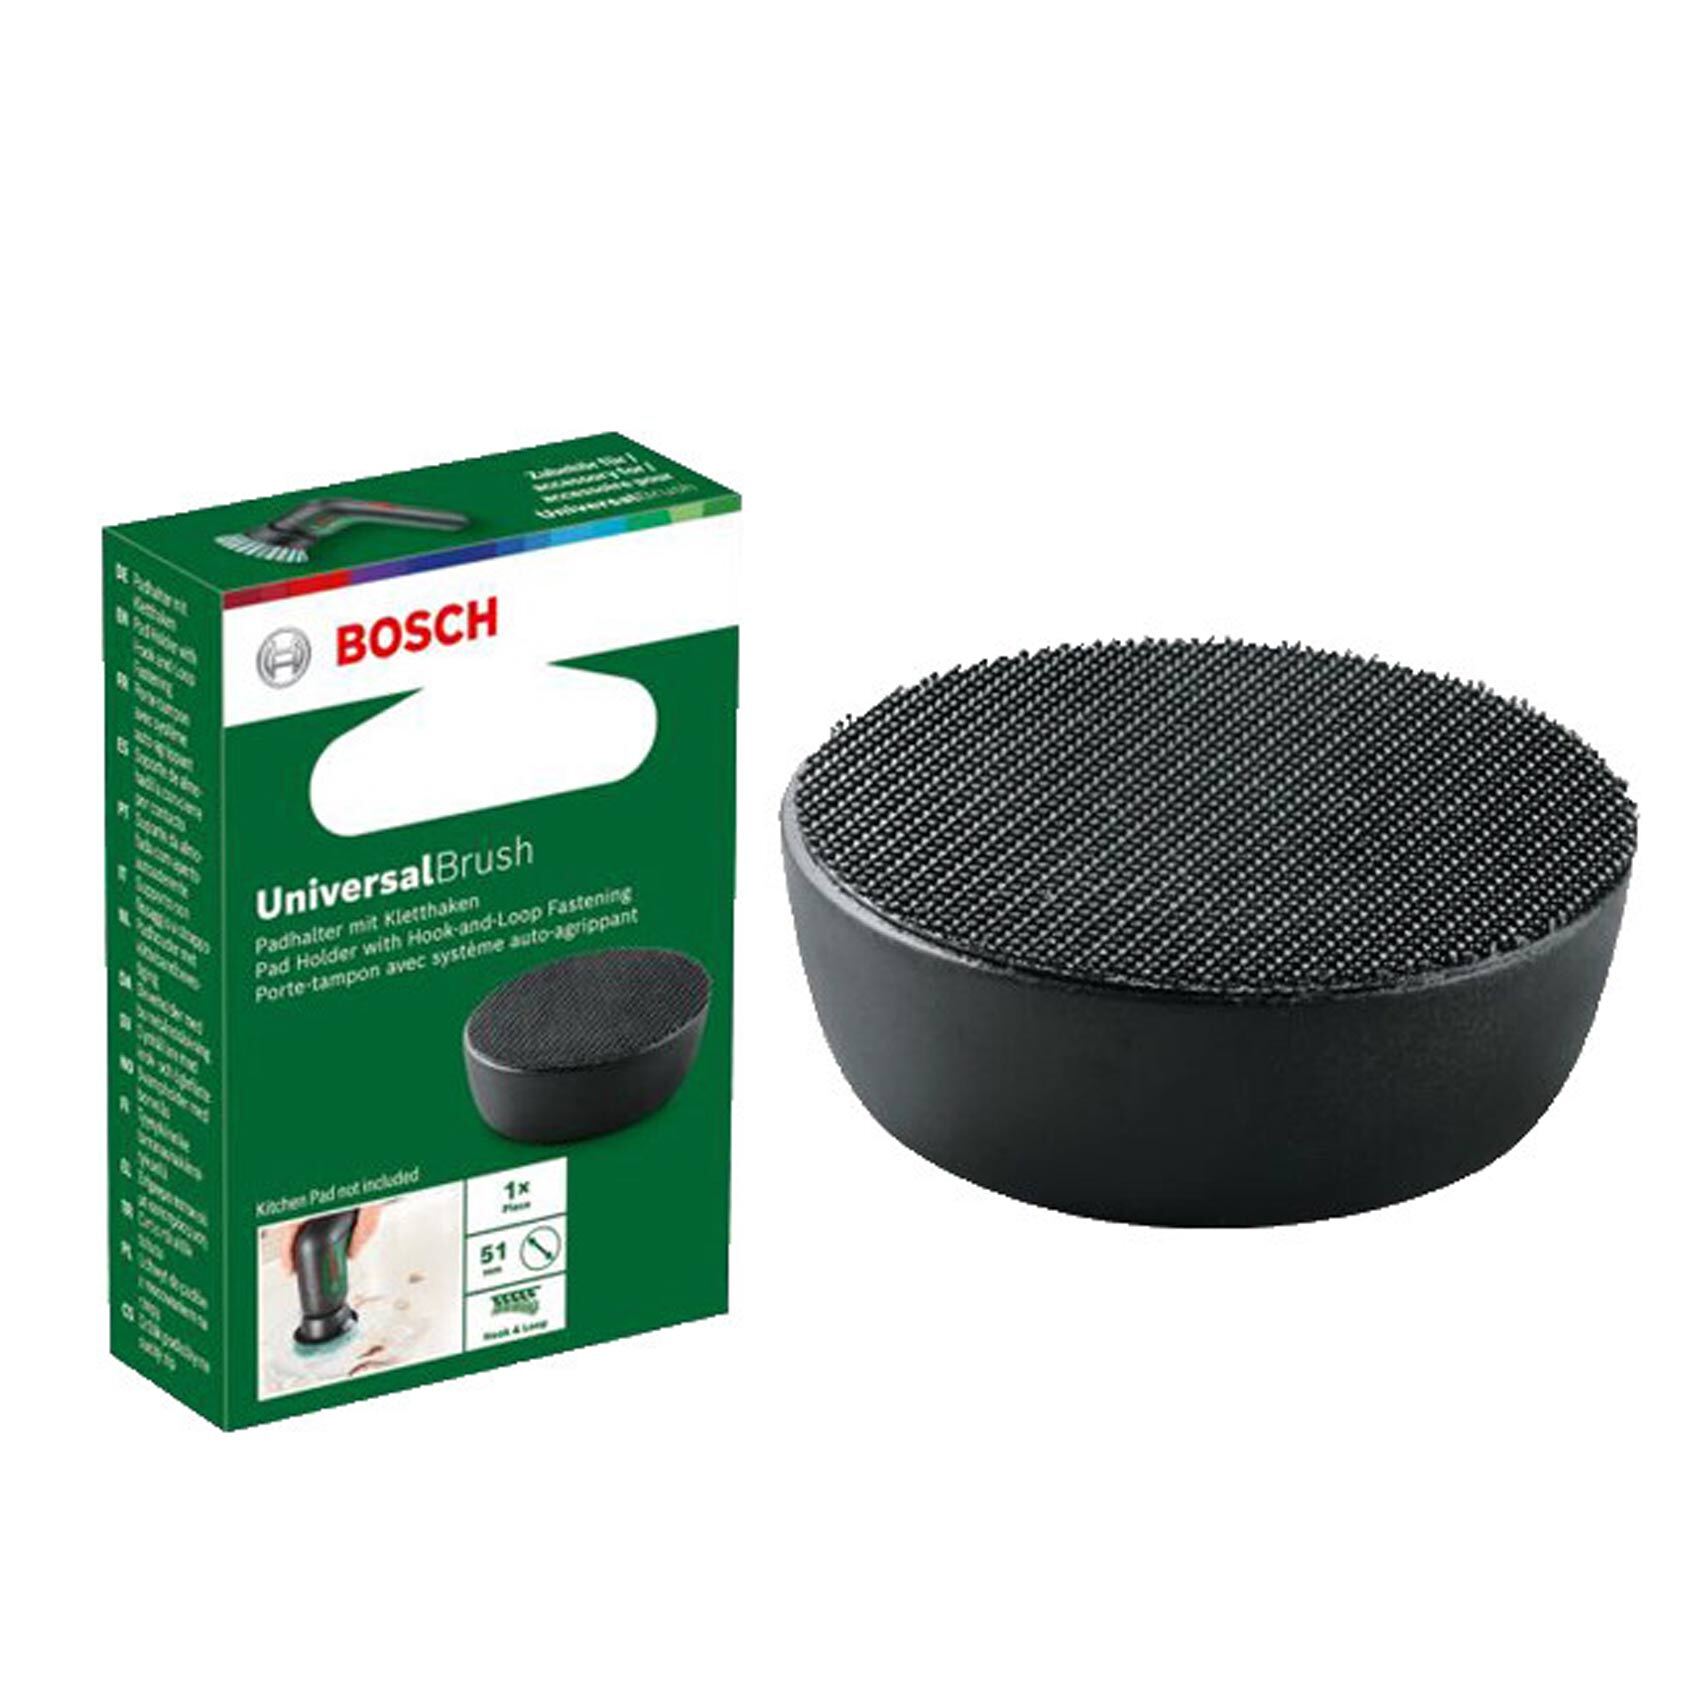 Buy Bosch Brush Pad Holder Online - Shop Home & Garden on Carrefour Jordan